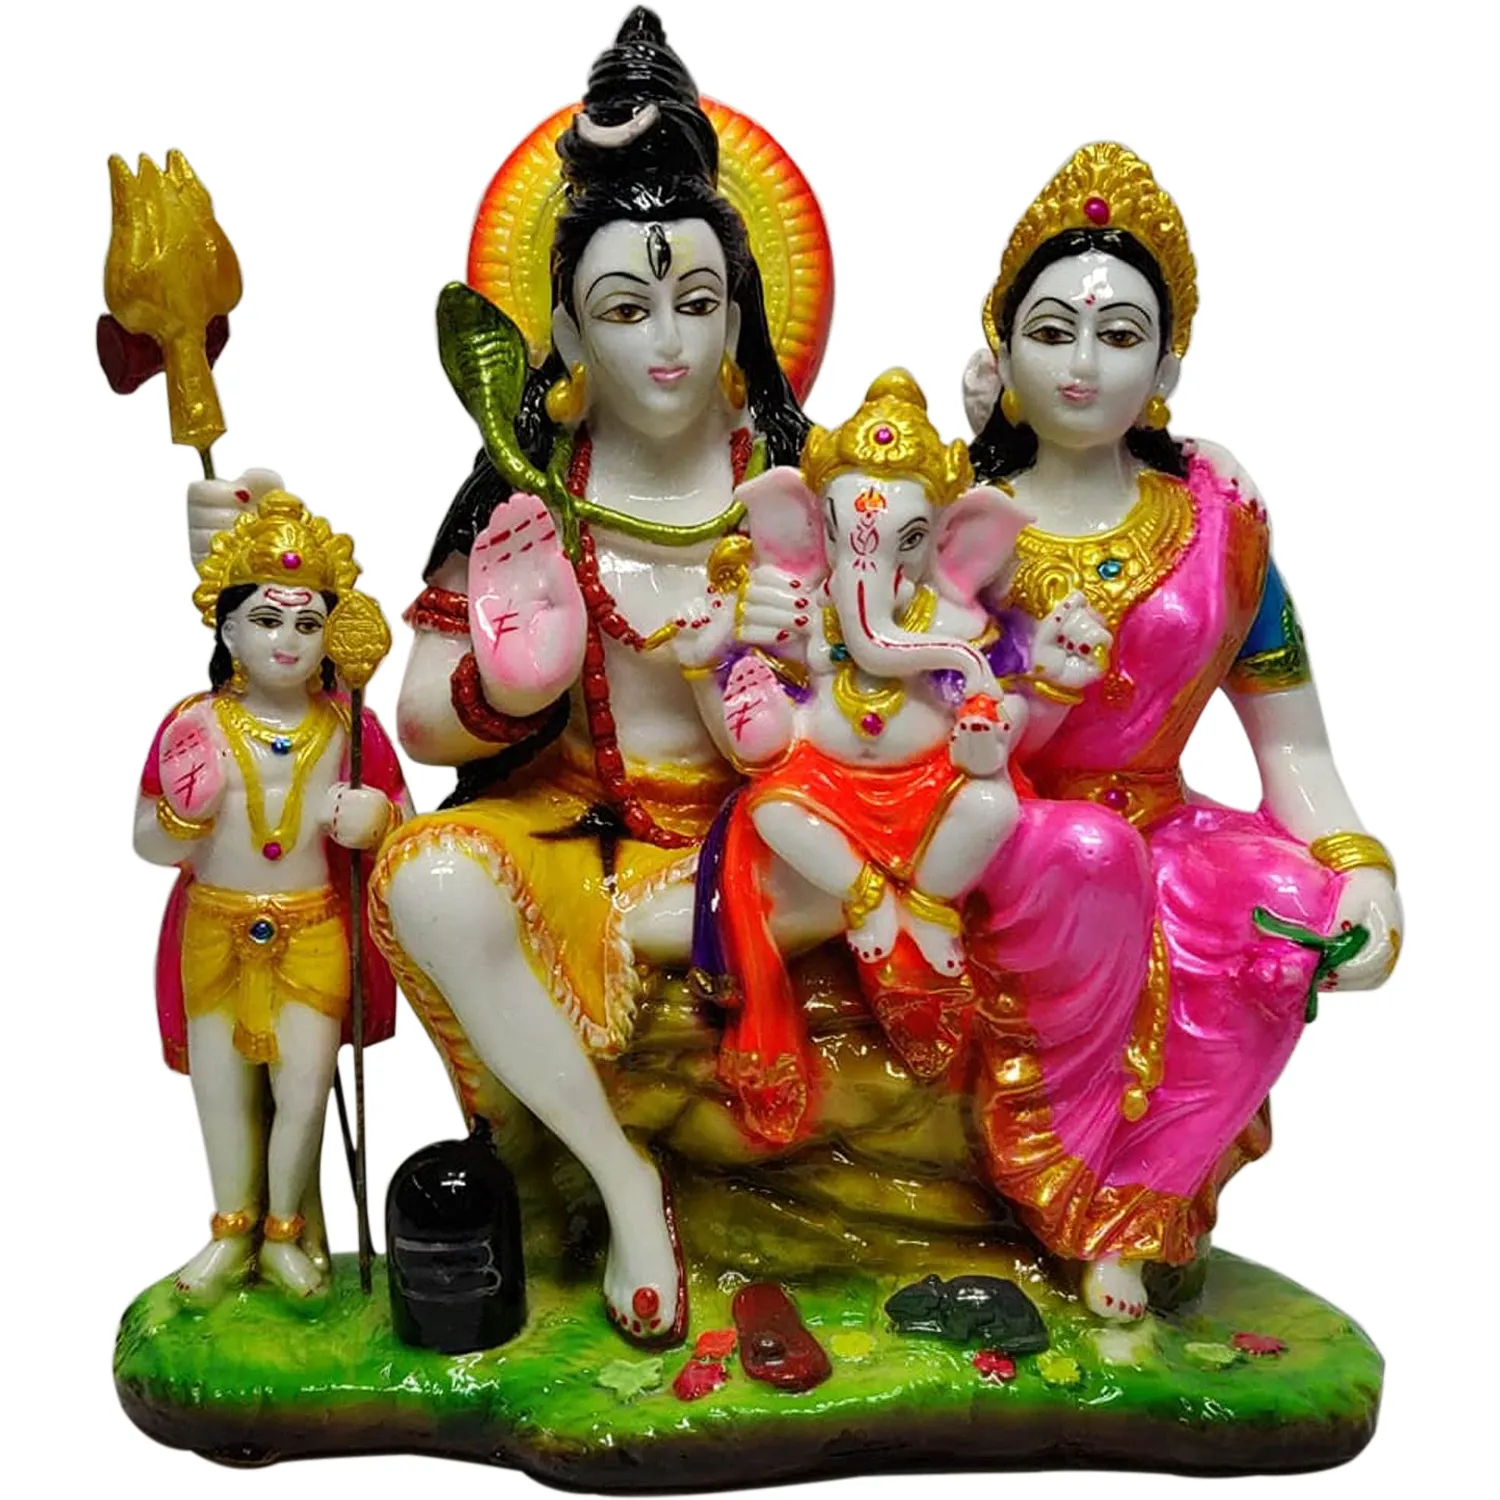 Bustes de famille attirante, 10 pouces, Shiva Parvati ganbangladesh et Kartikeya Idol, Sculpture de la famille de dieu